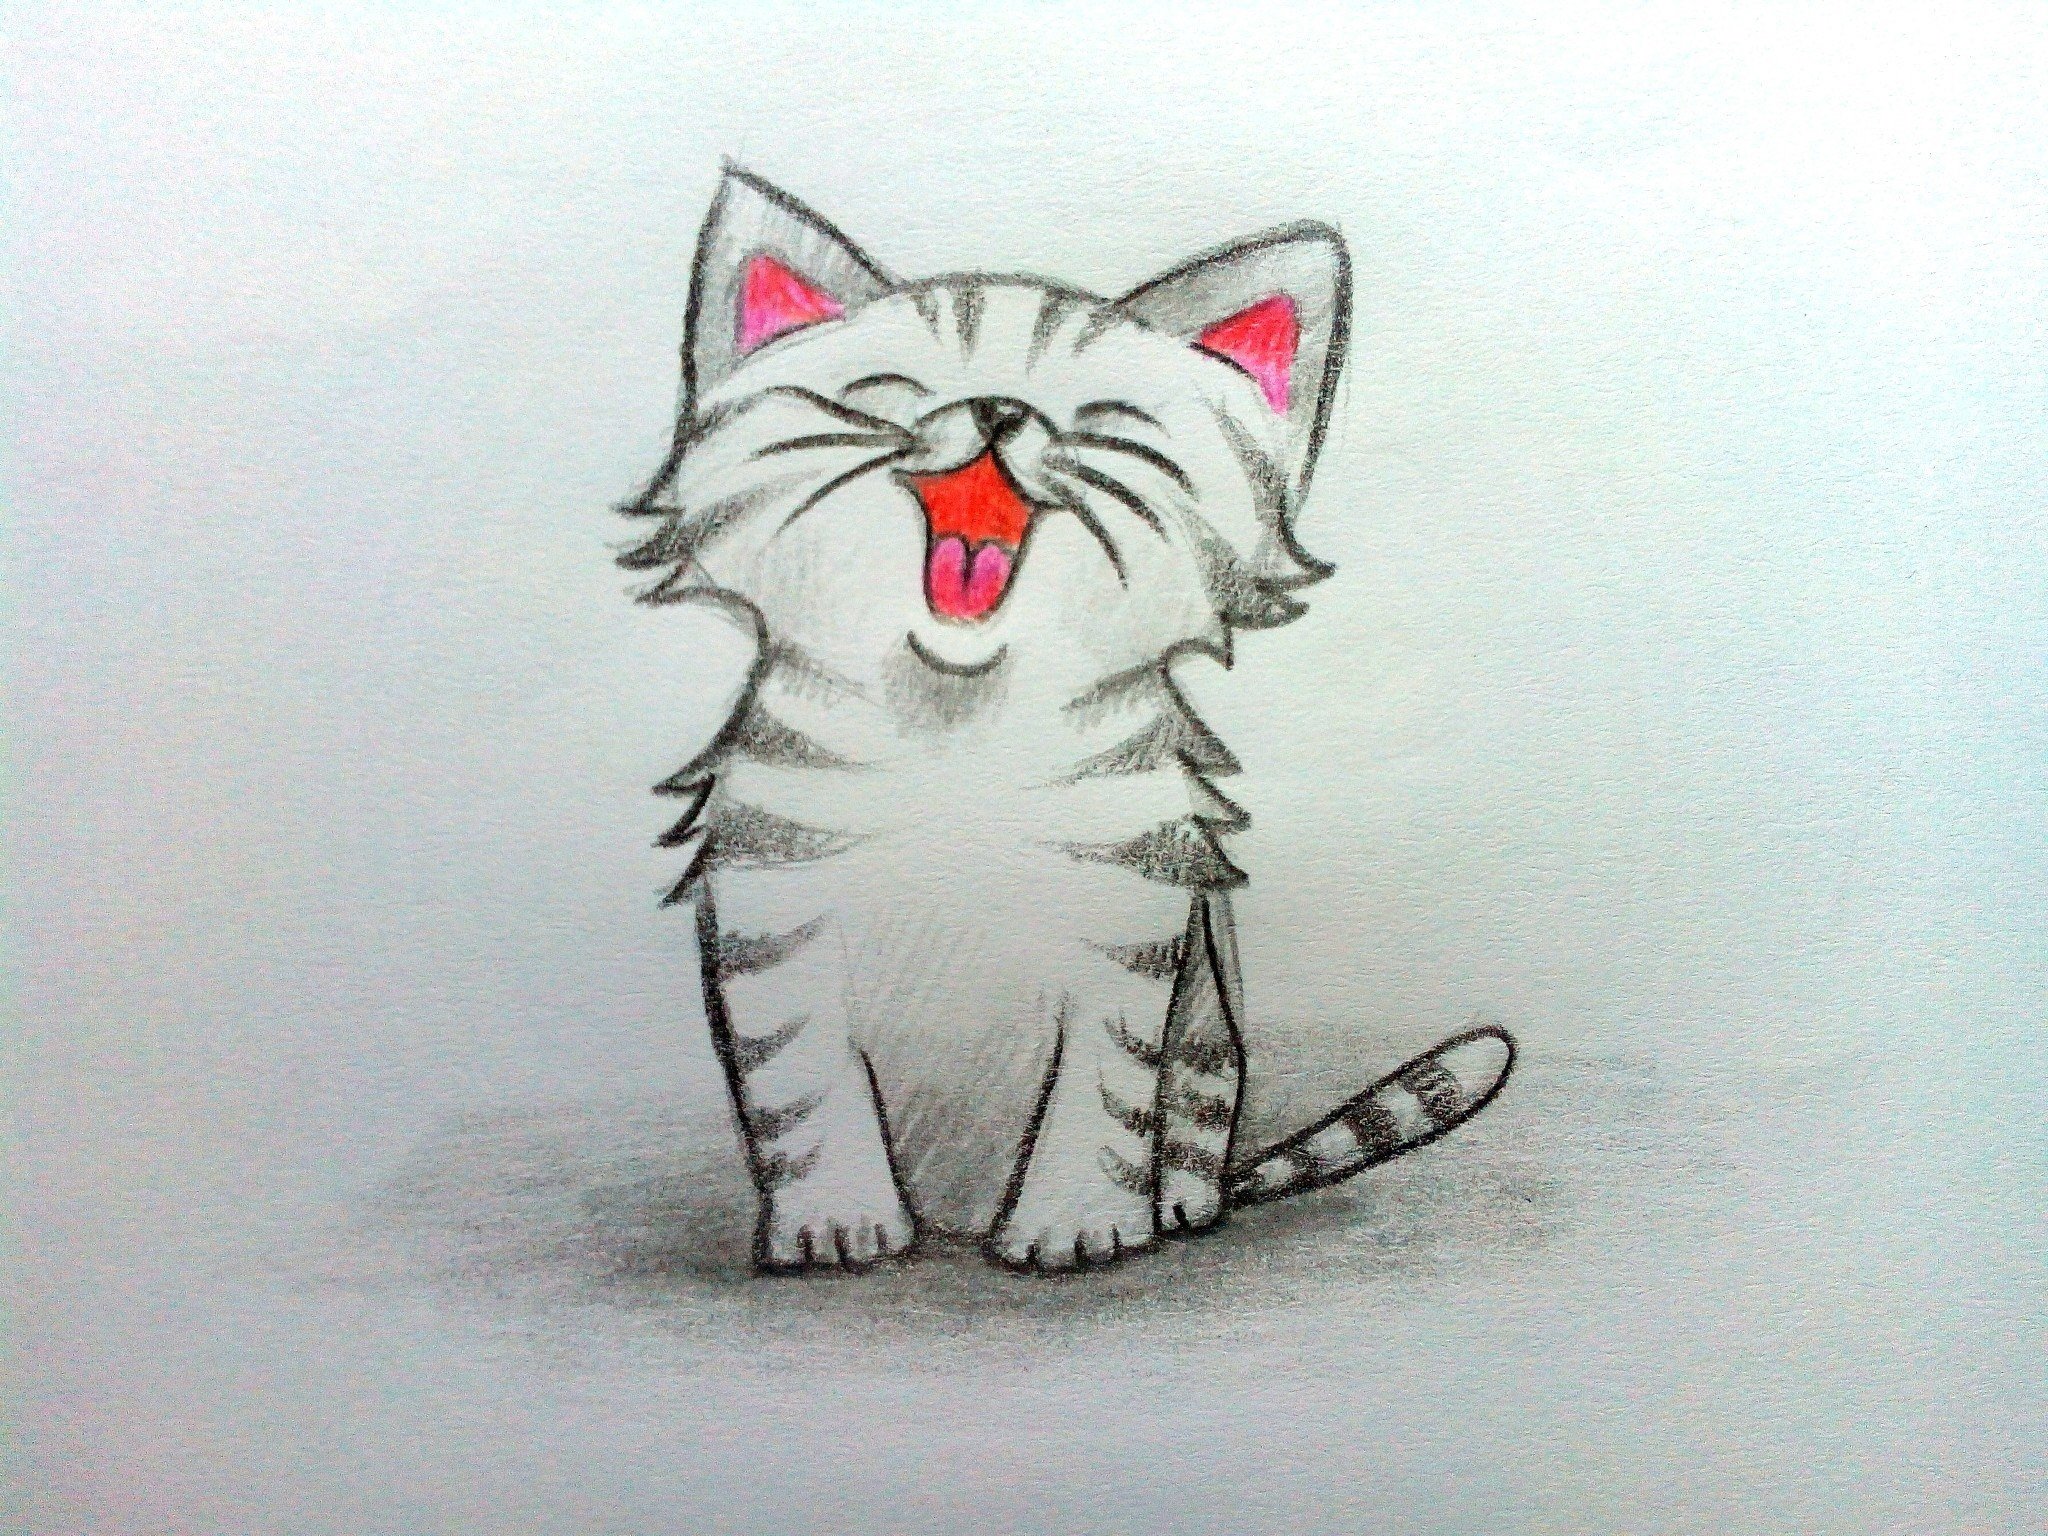 Фото рисунка кошки. Котёнок рисунок карандашом. Рисунок кошки карандашом для срисовки. Котики для срисовки карандашом. Кот для срисовки карандашом.